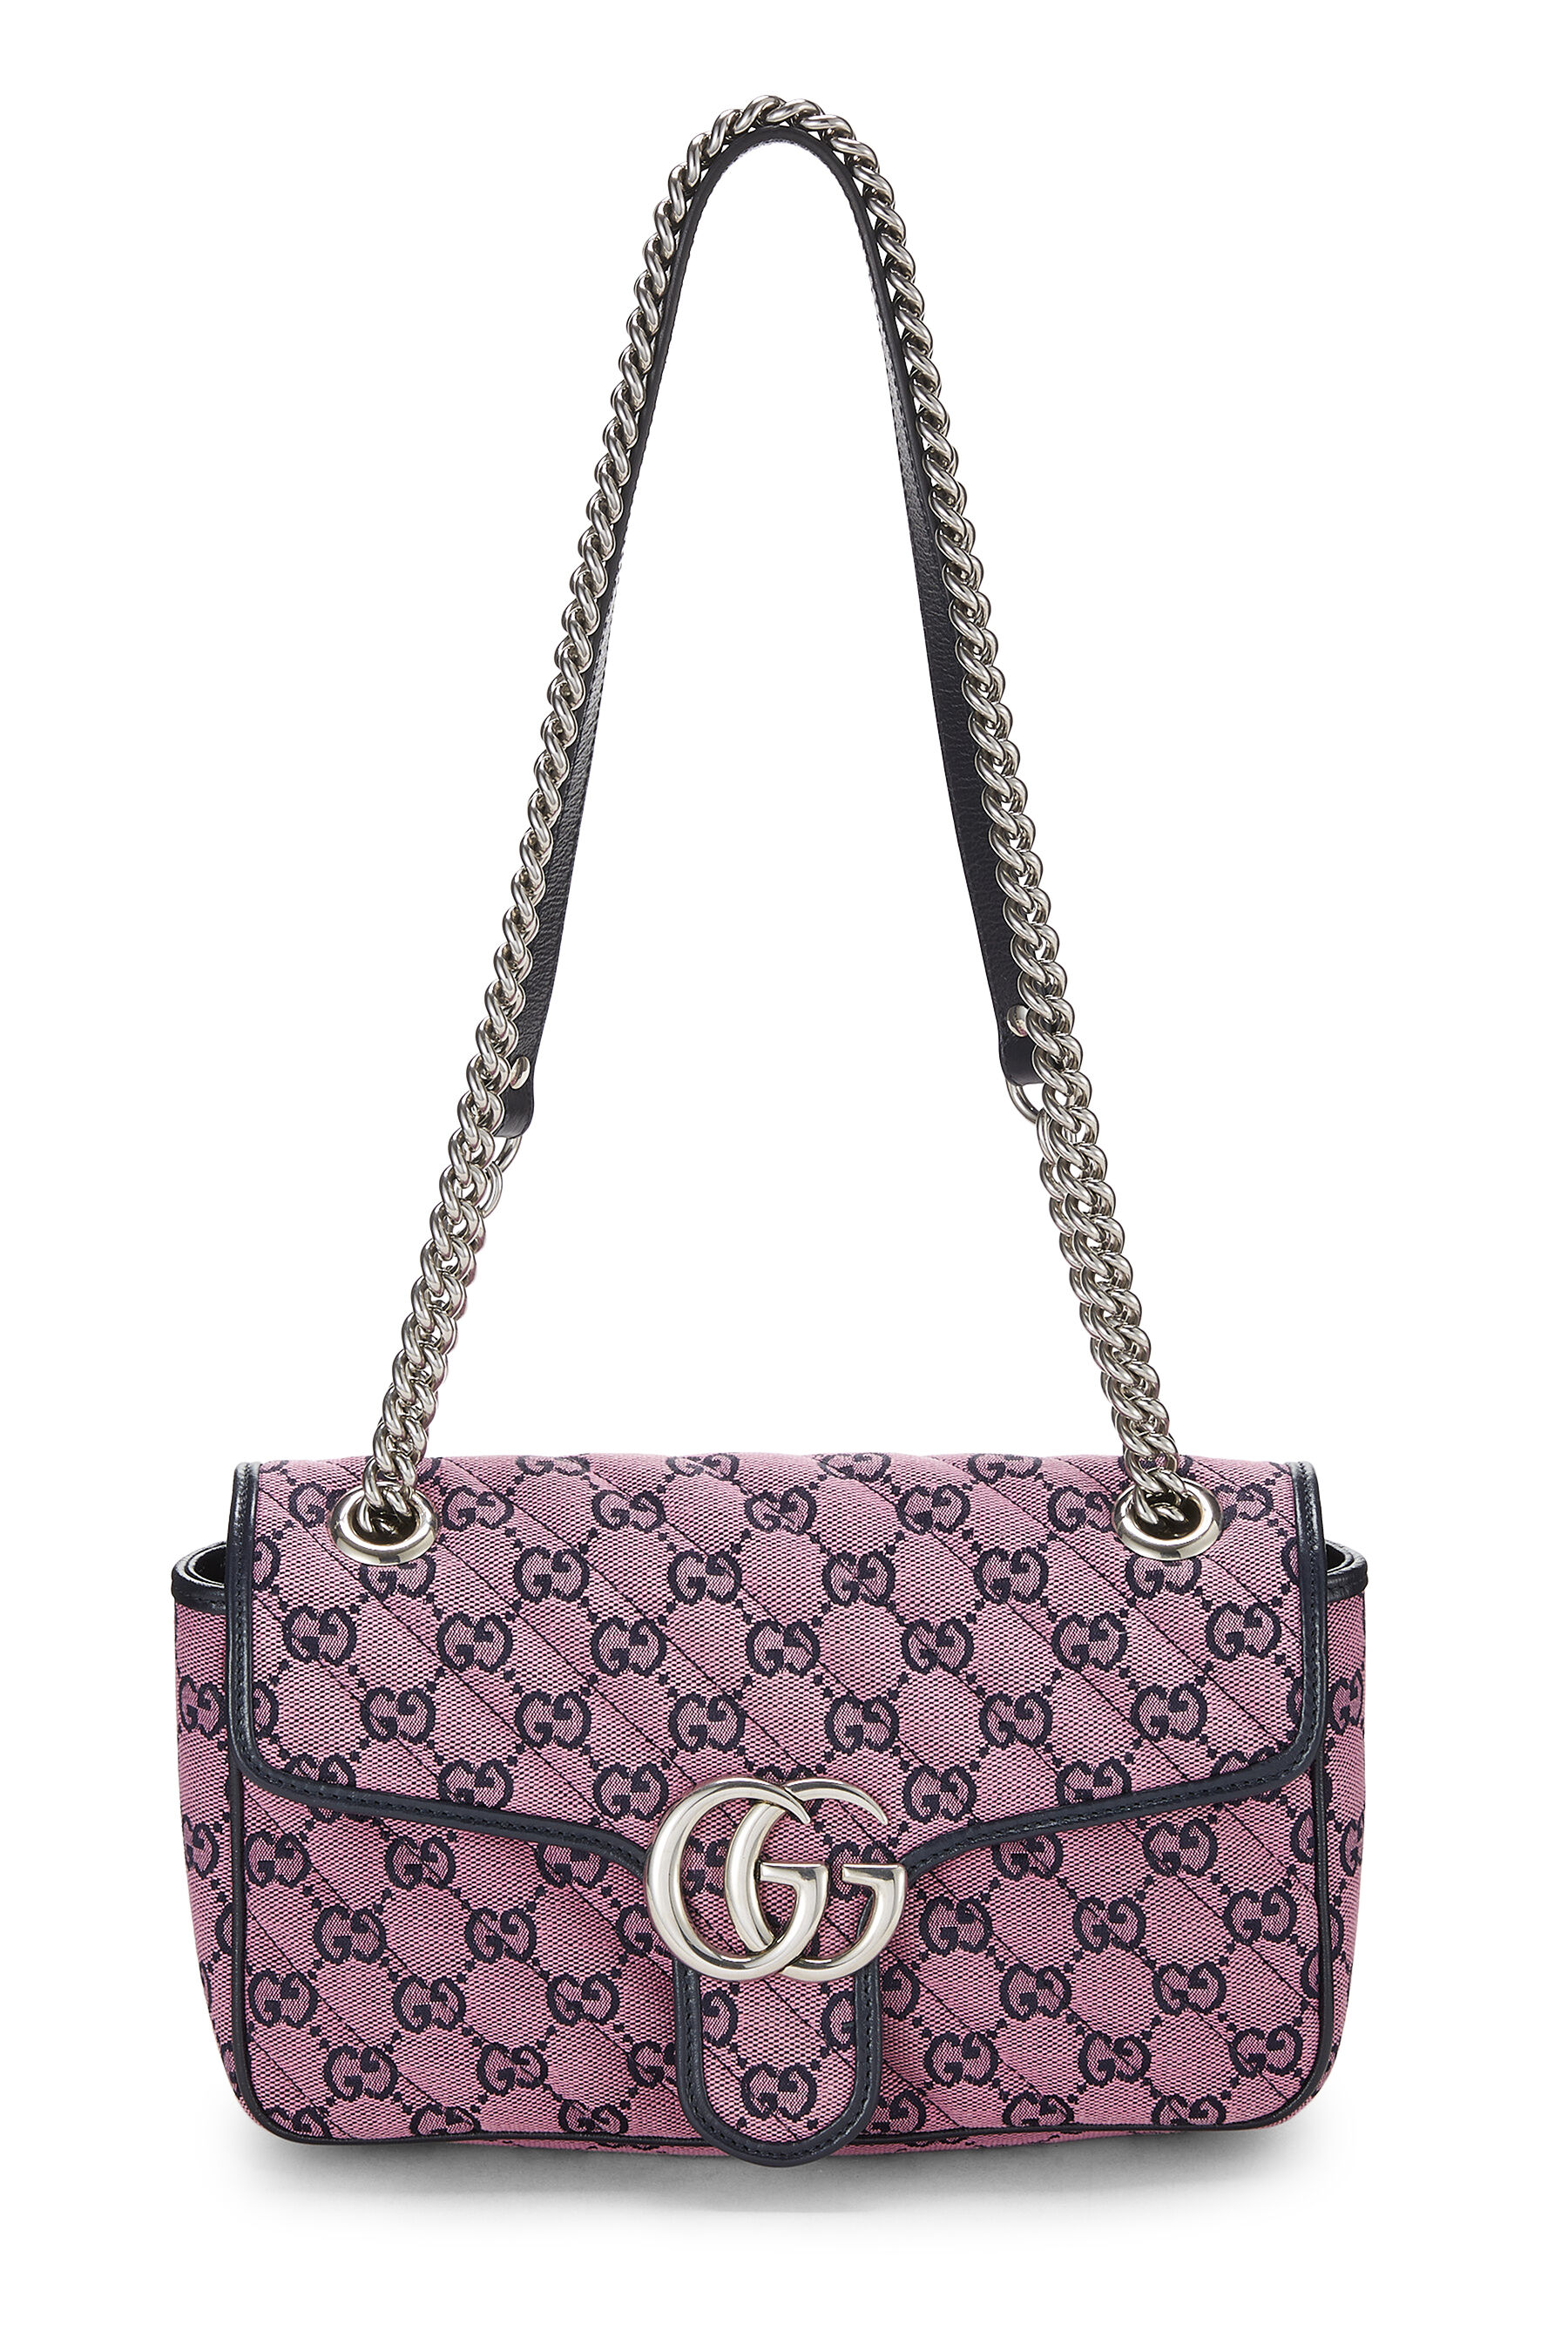 Gucci Pink Original GG Canvas Marmont Shoulder Bag Small